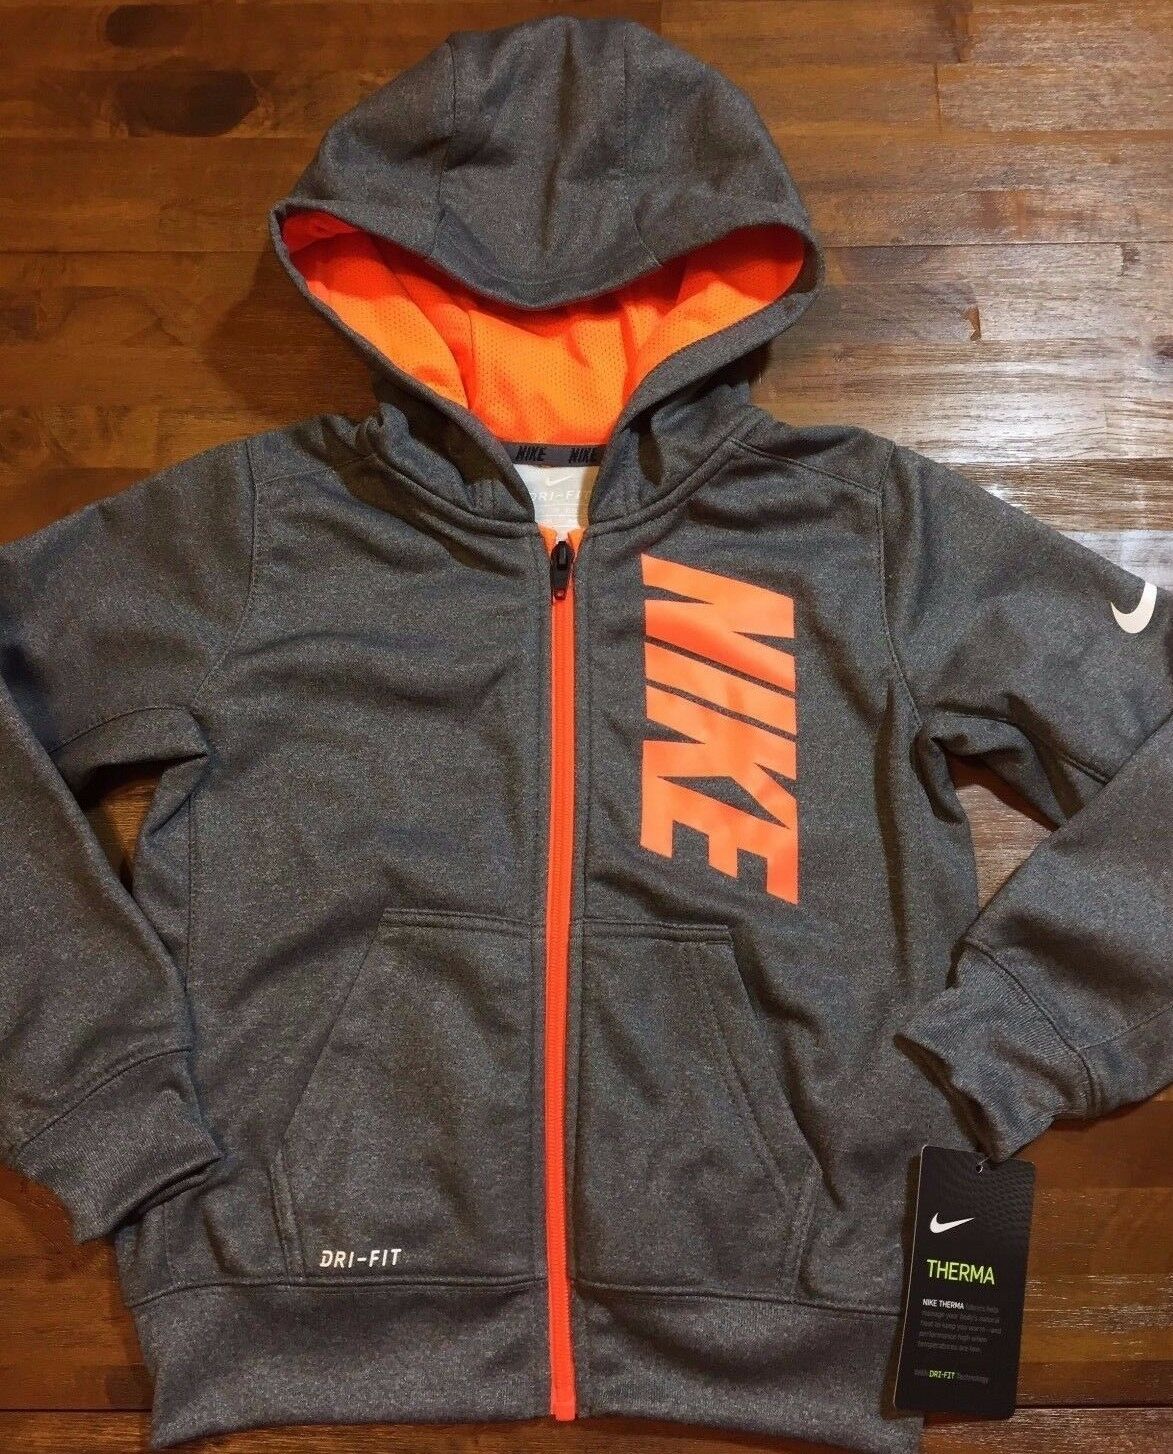 Nike Therma Zipper Hoodie Sweatshirt - Little Boy's Size 6 (gray/orange) Nwt